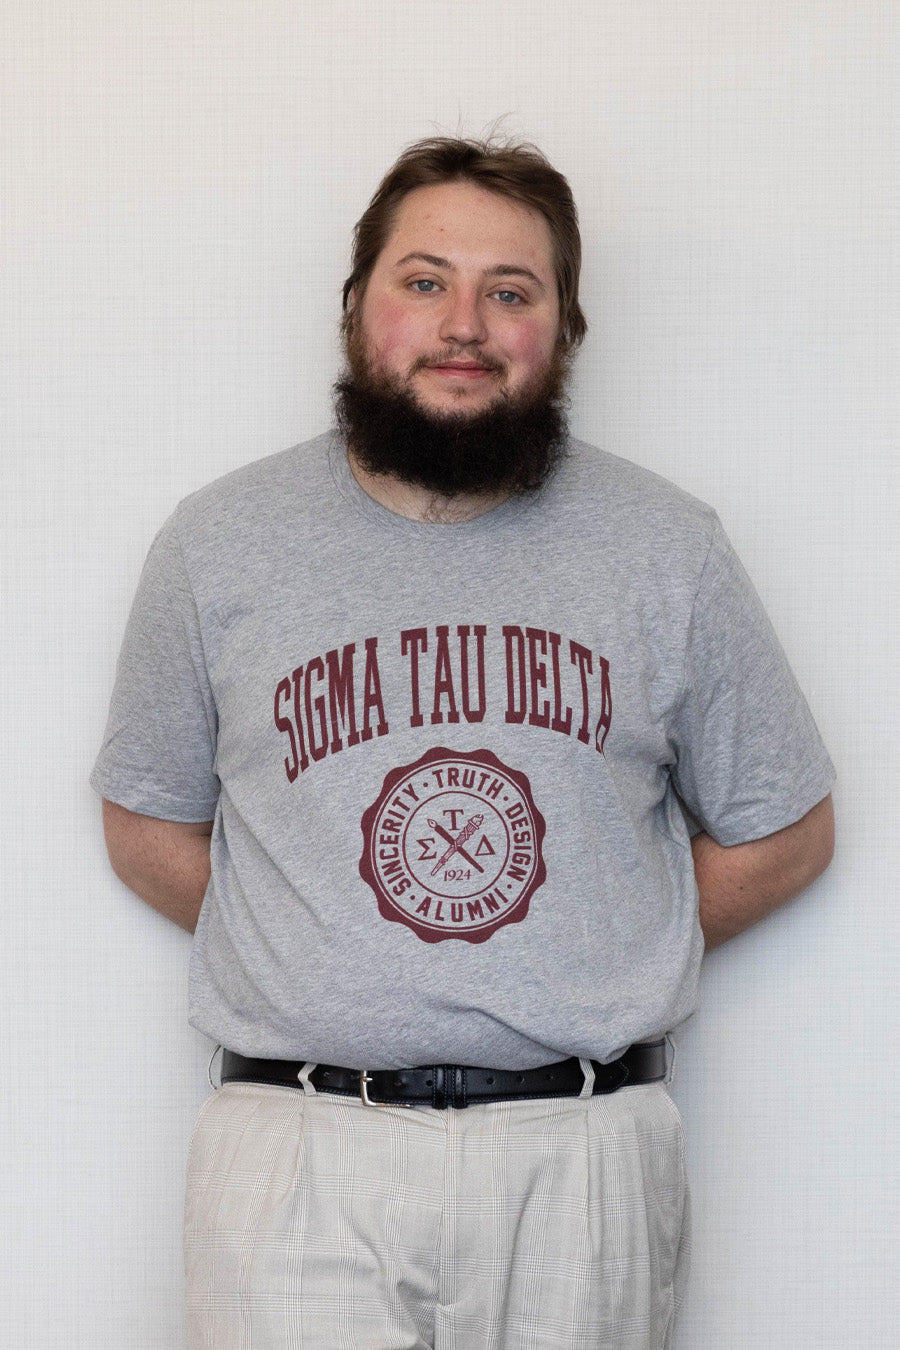 Alum Seal T-Shirt